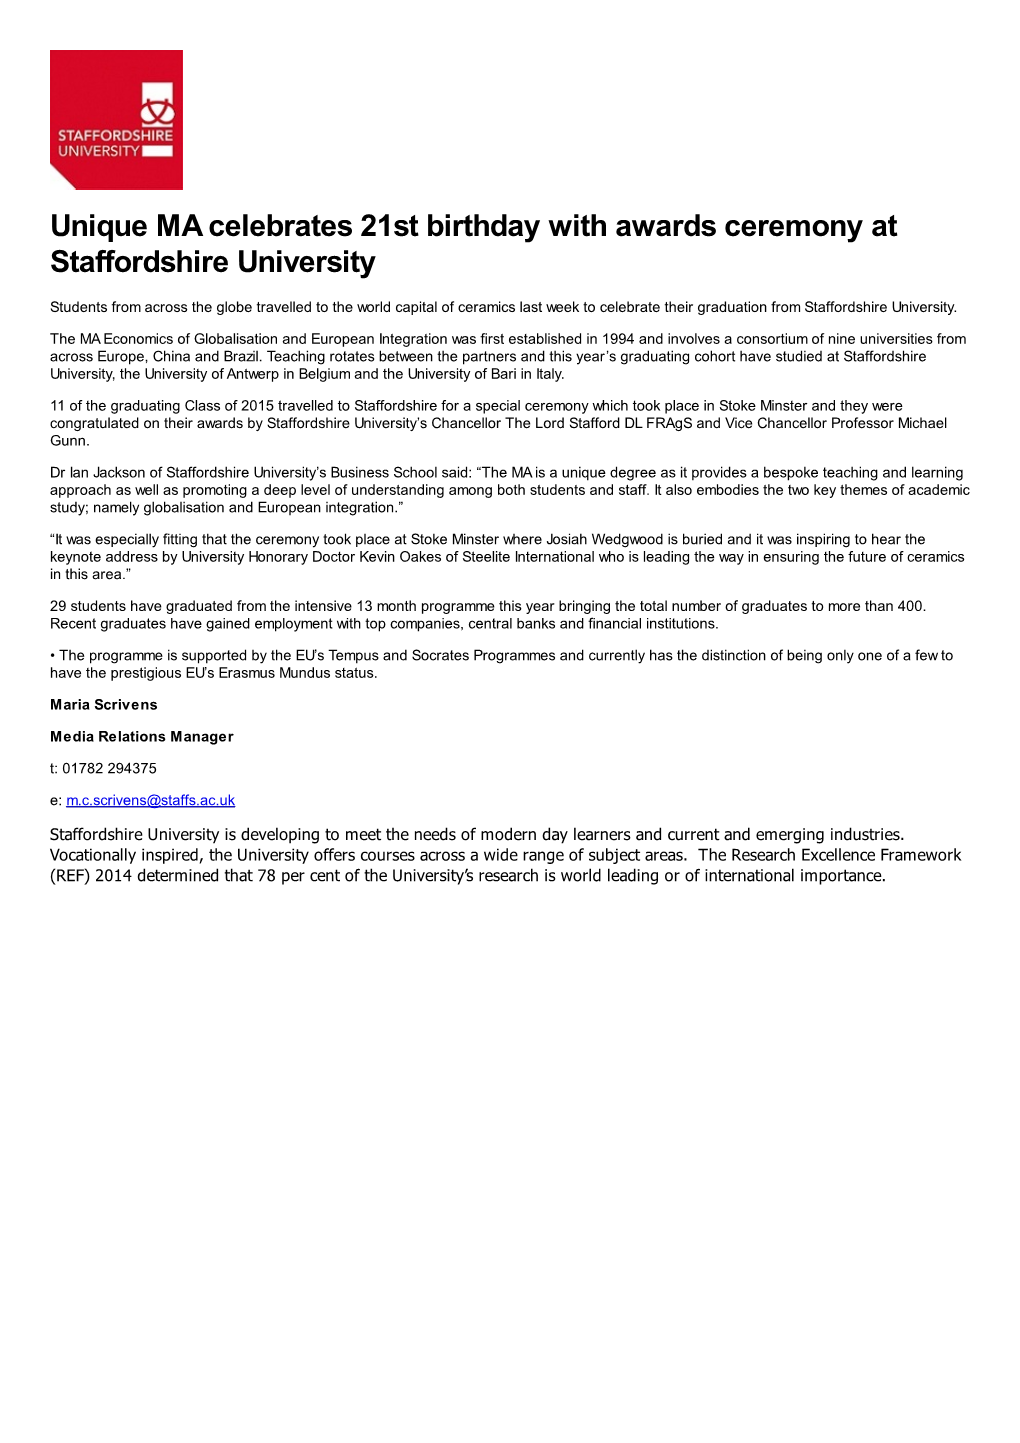 Unique MA Celebrates 21St Birthday with Awards Ceremony at Staffordshire University